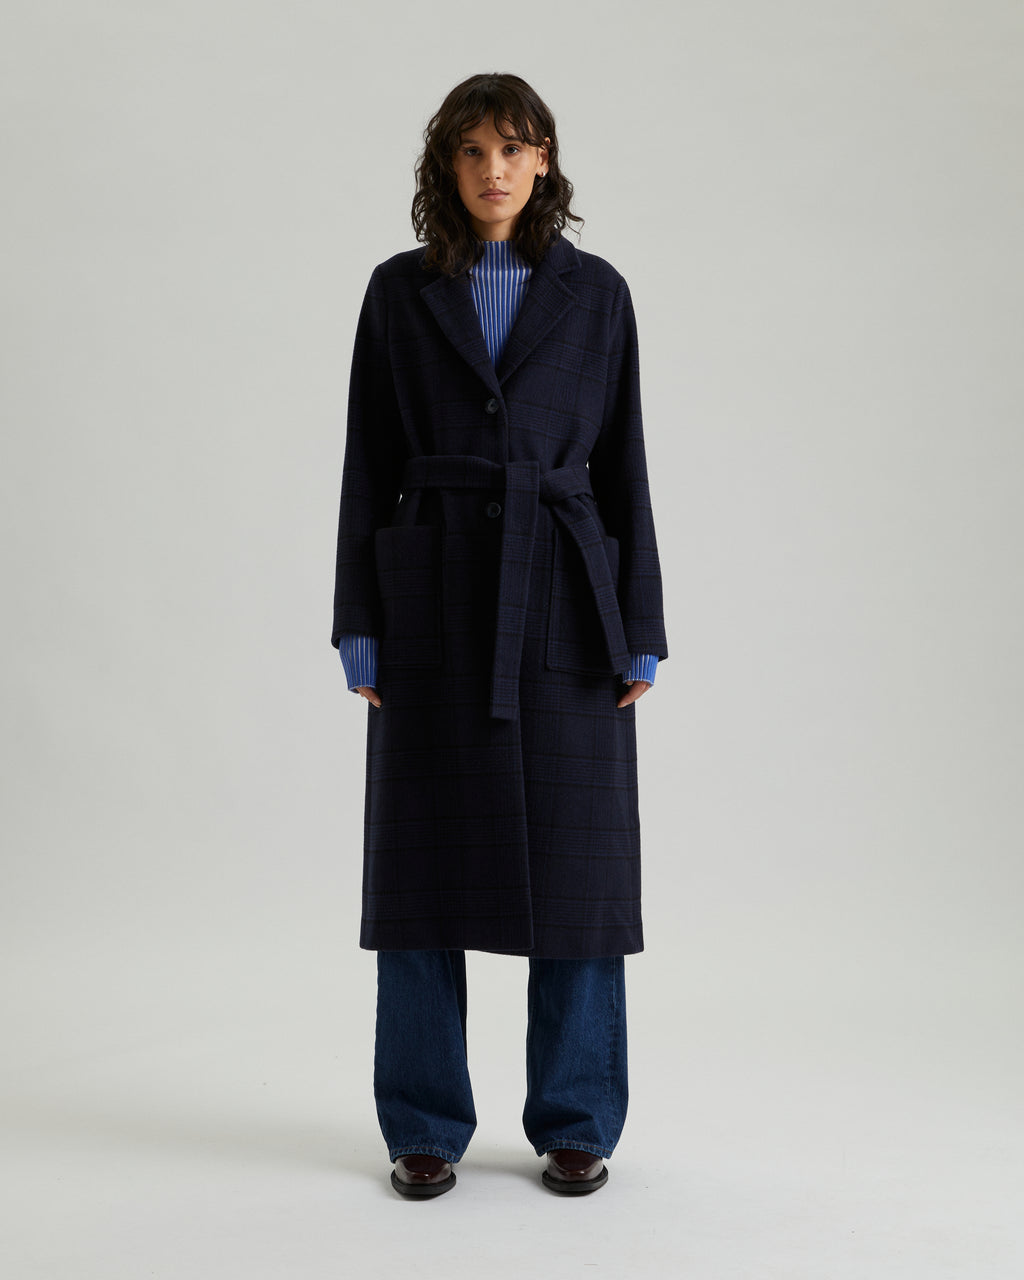 Women's Jackets, Coats, Sweaters & Outwear | BRIXTOL TEXTILES